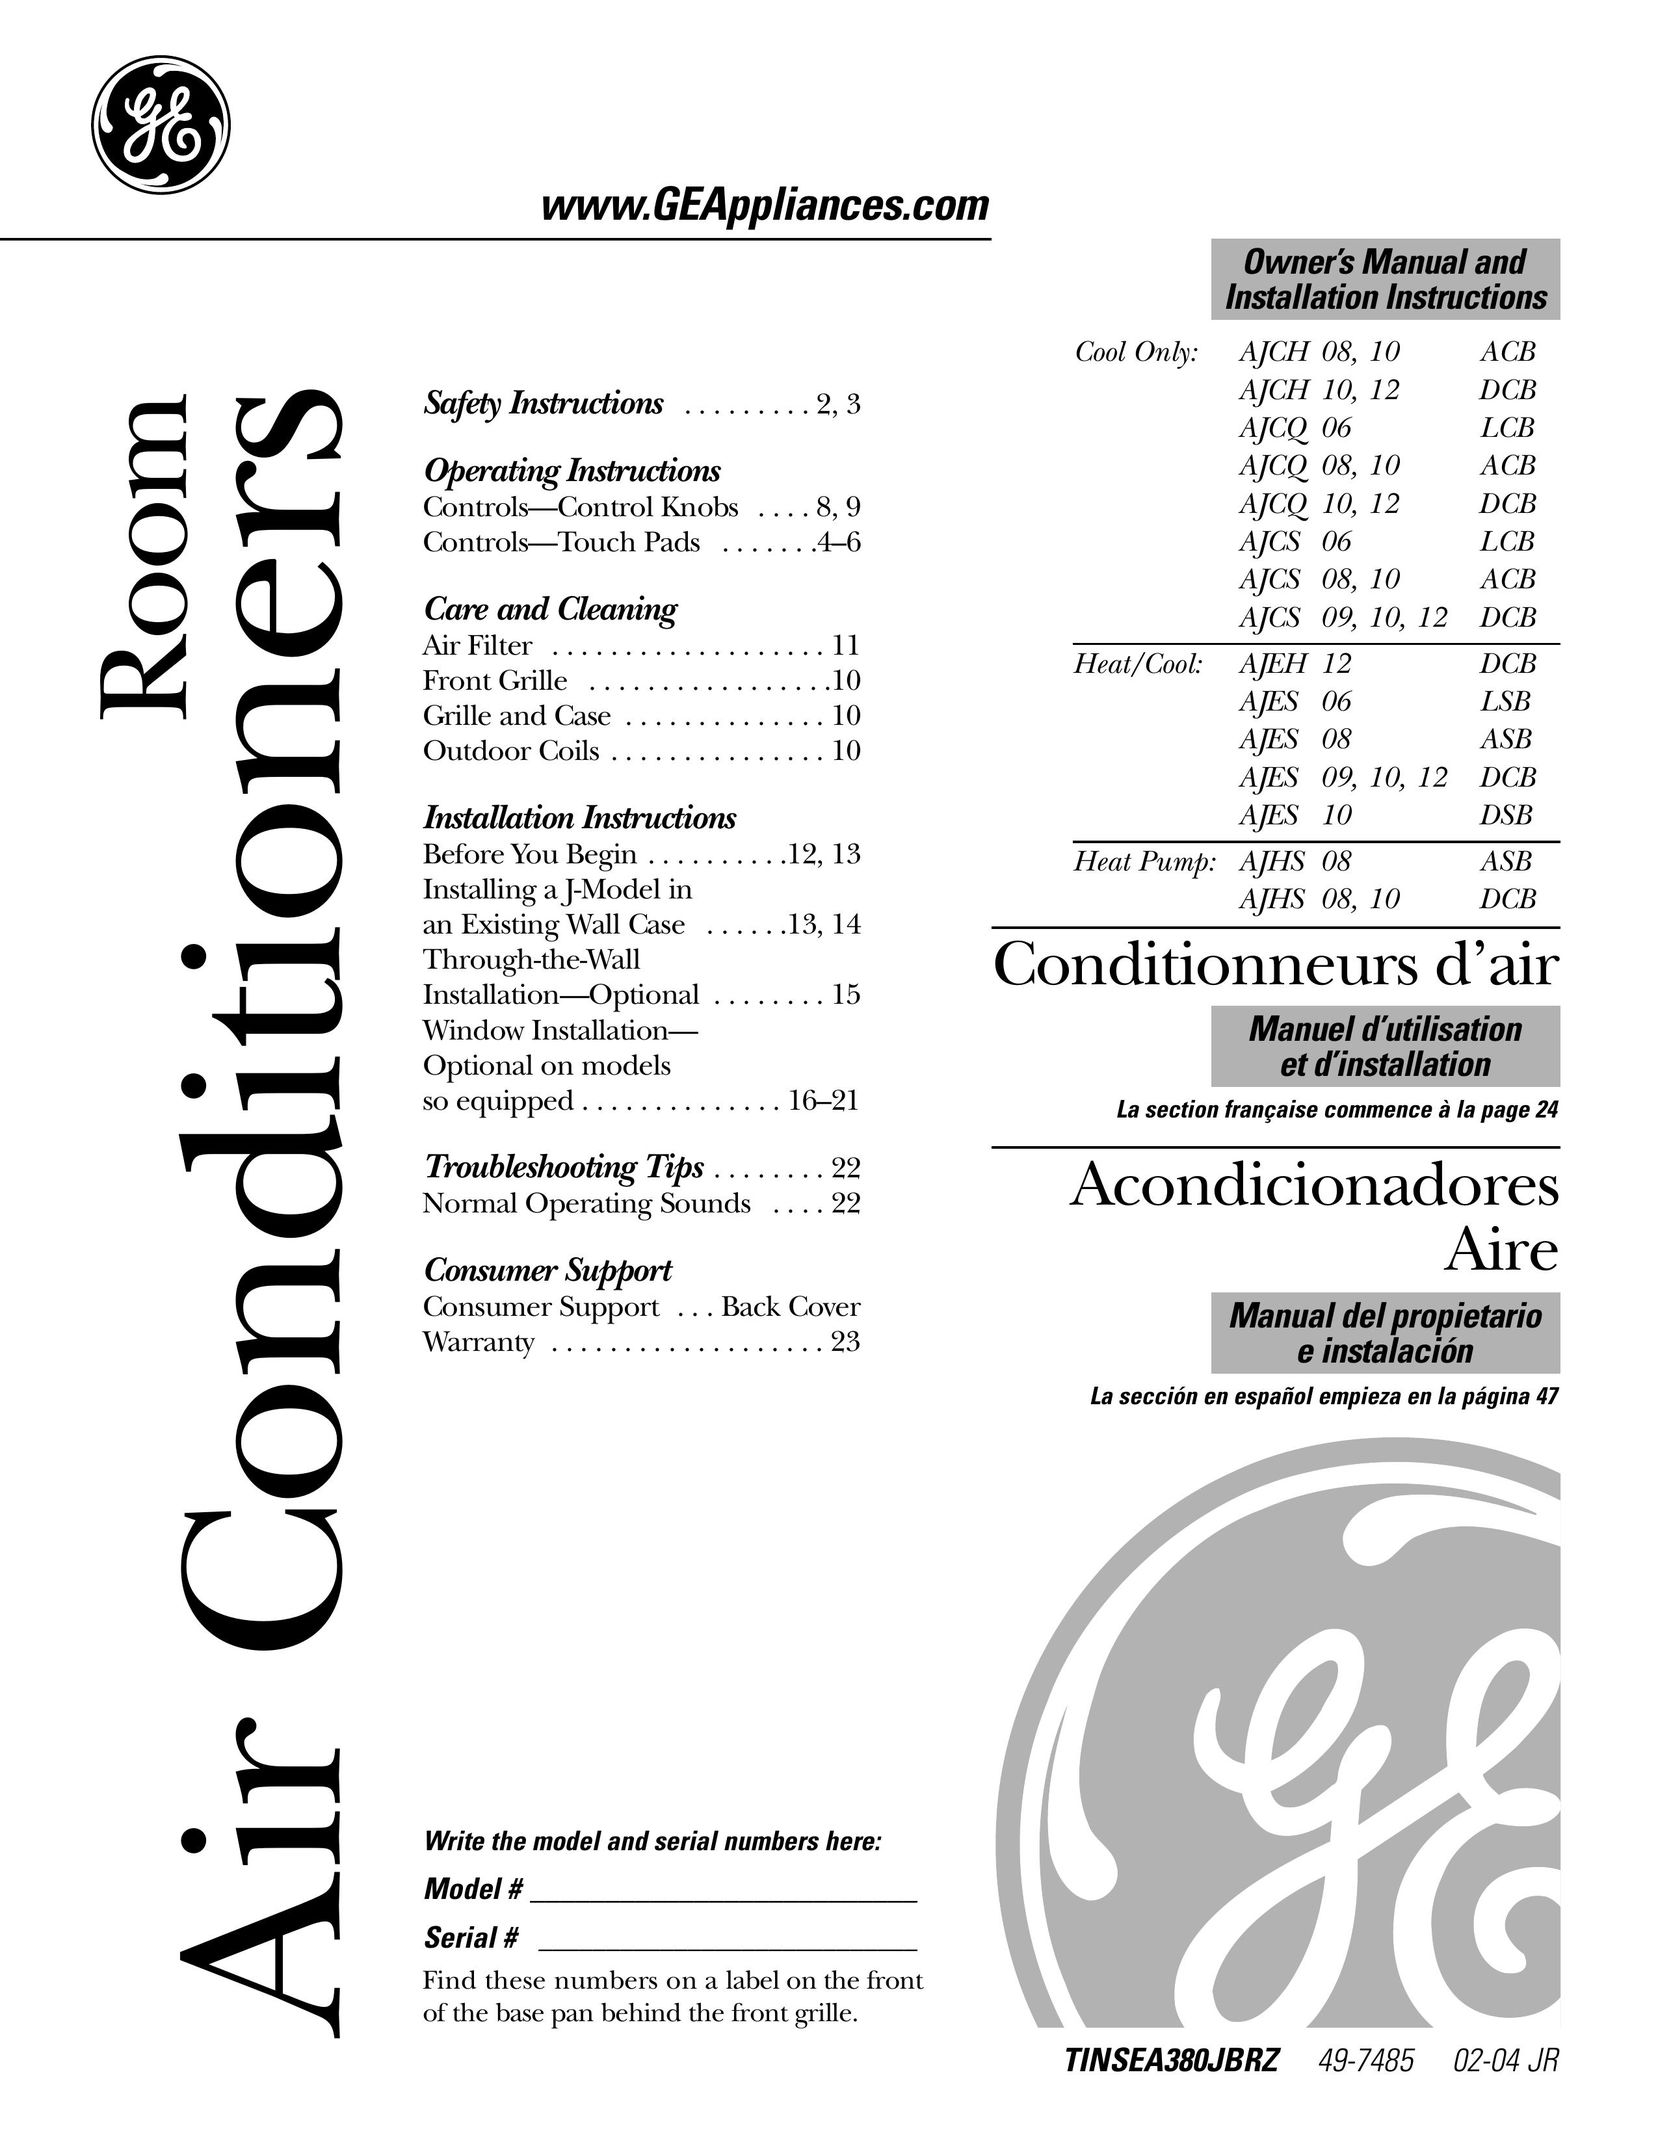 GE ACB AJCS 12 DCB Air Conditioner User Manual